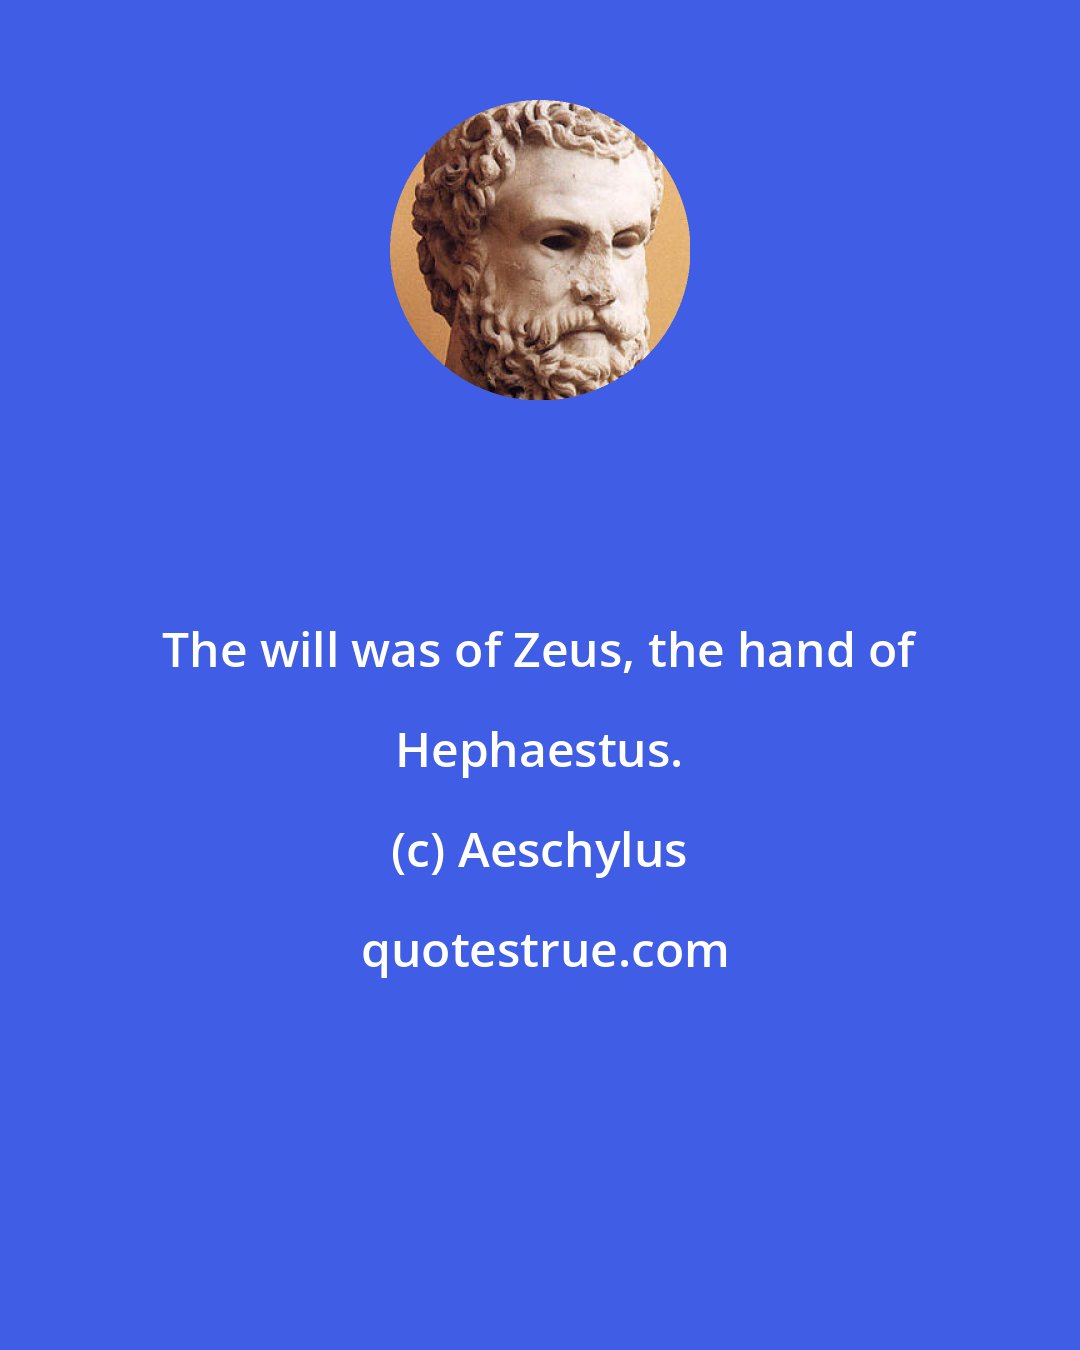 Aeschylus: The will was of Zeus, the hand of Hephaestus.